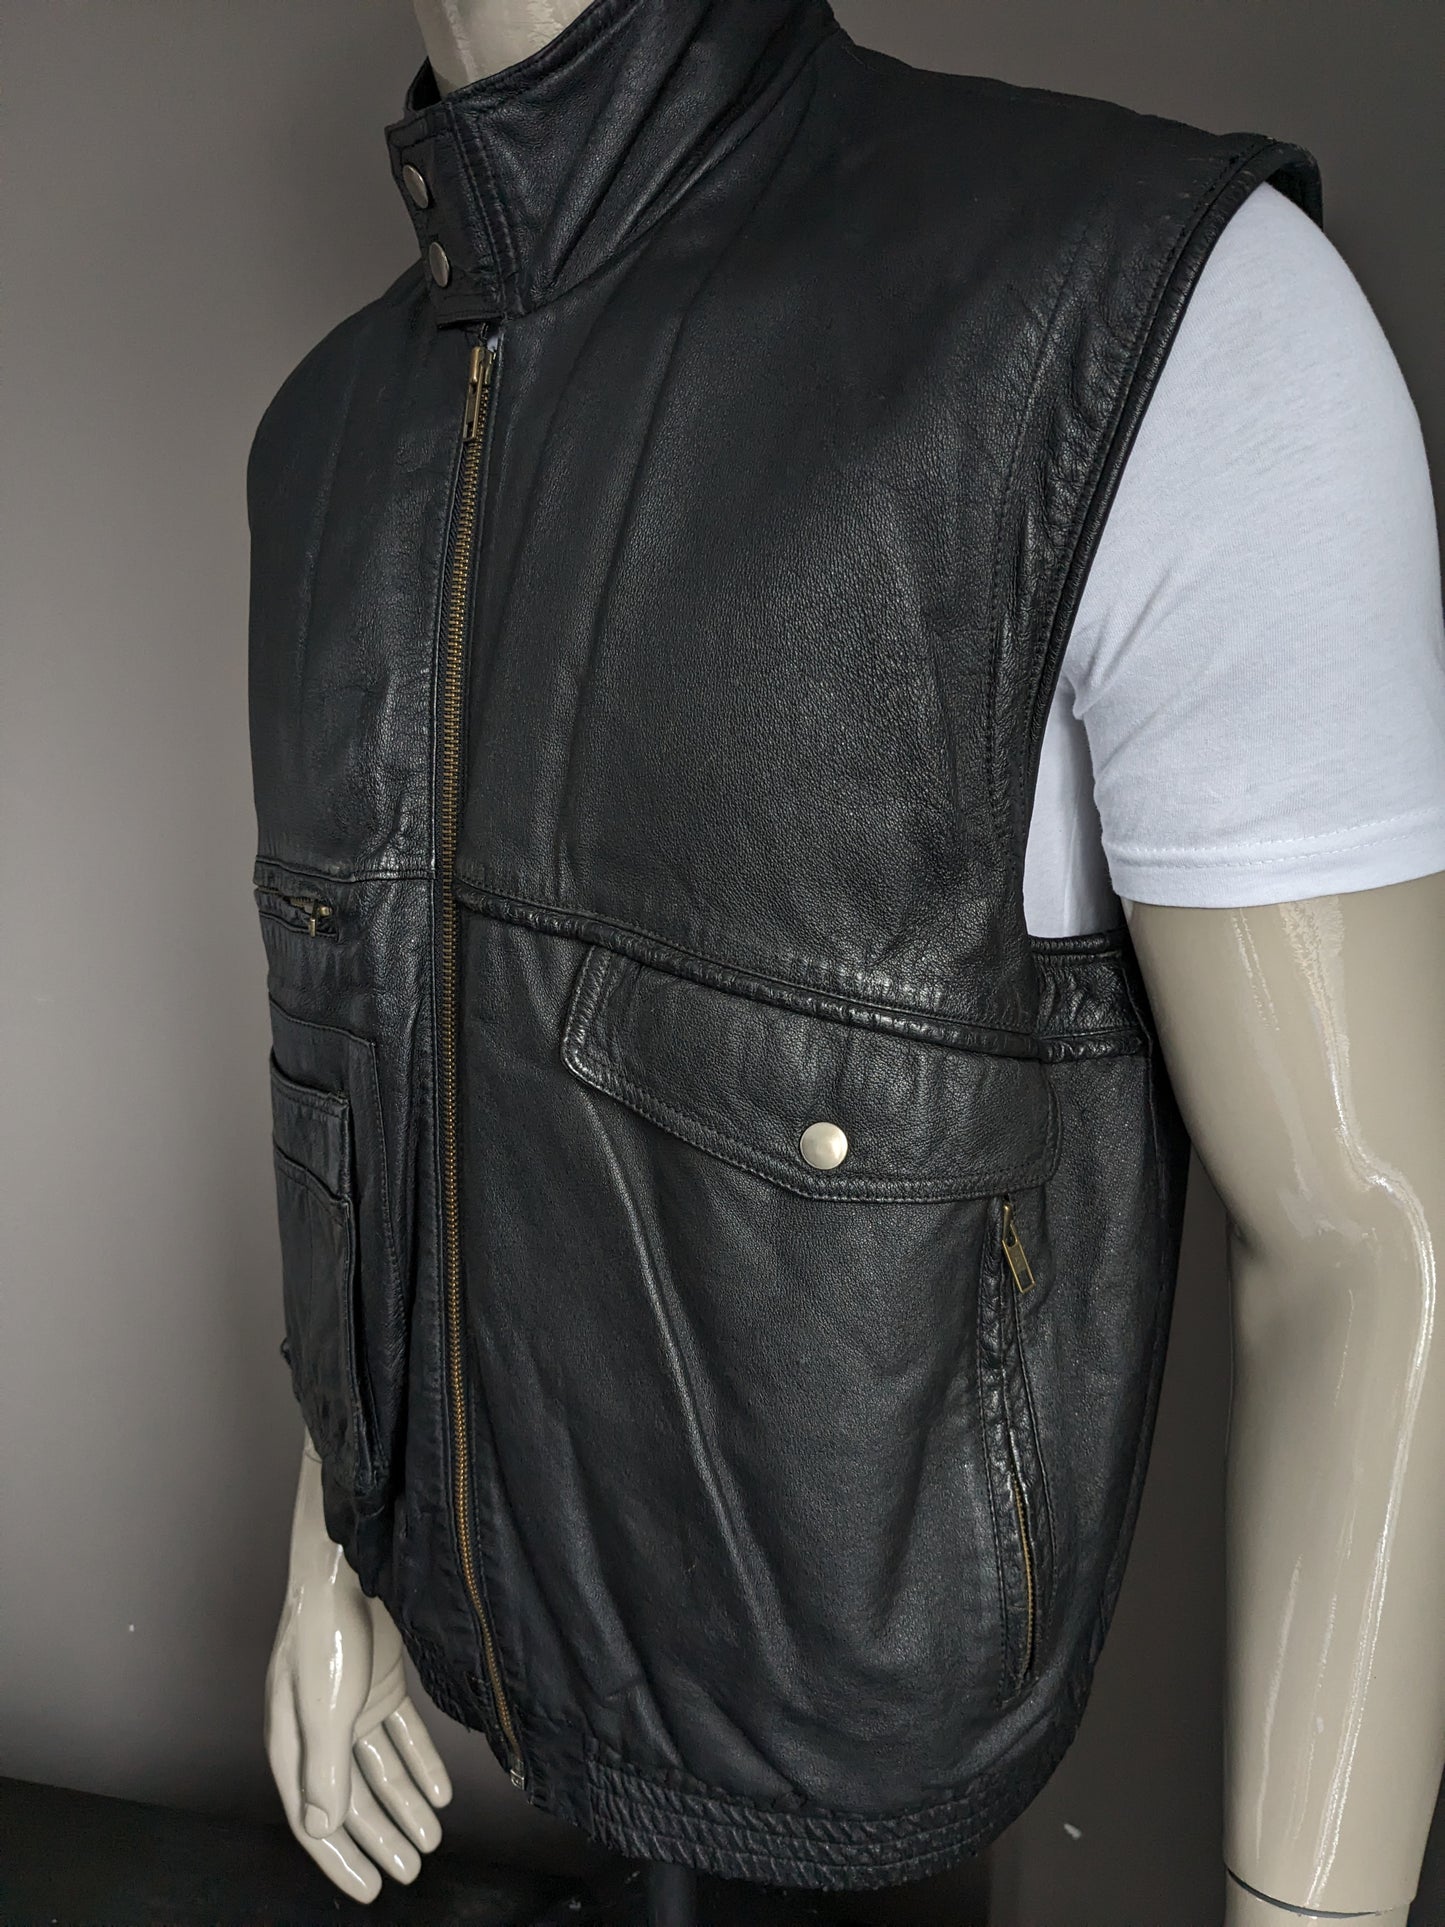 Vintage Aldo Colitti 80's - 90's Learn body warmer / waistcoat with inner pockets. Black. Size L.